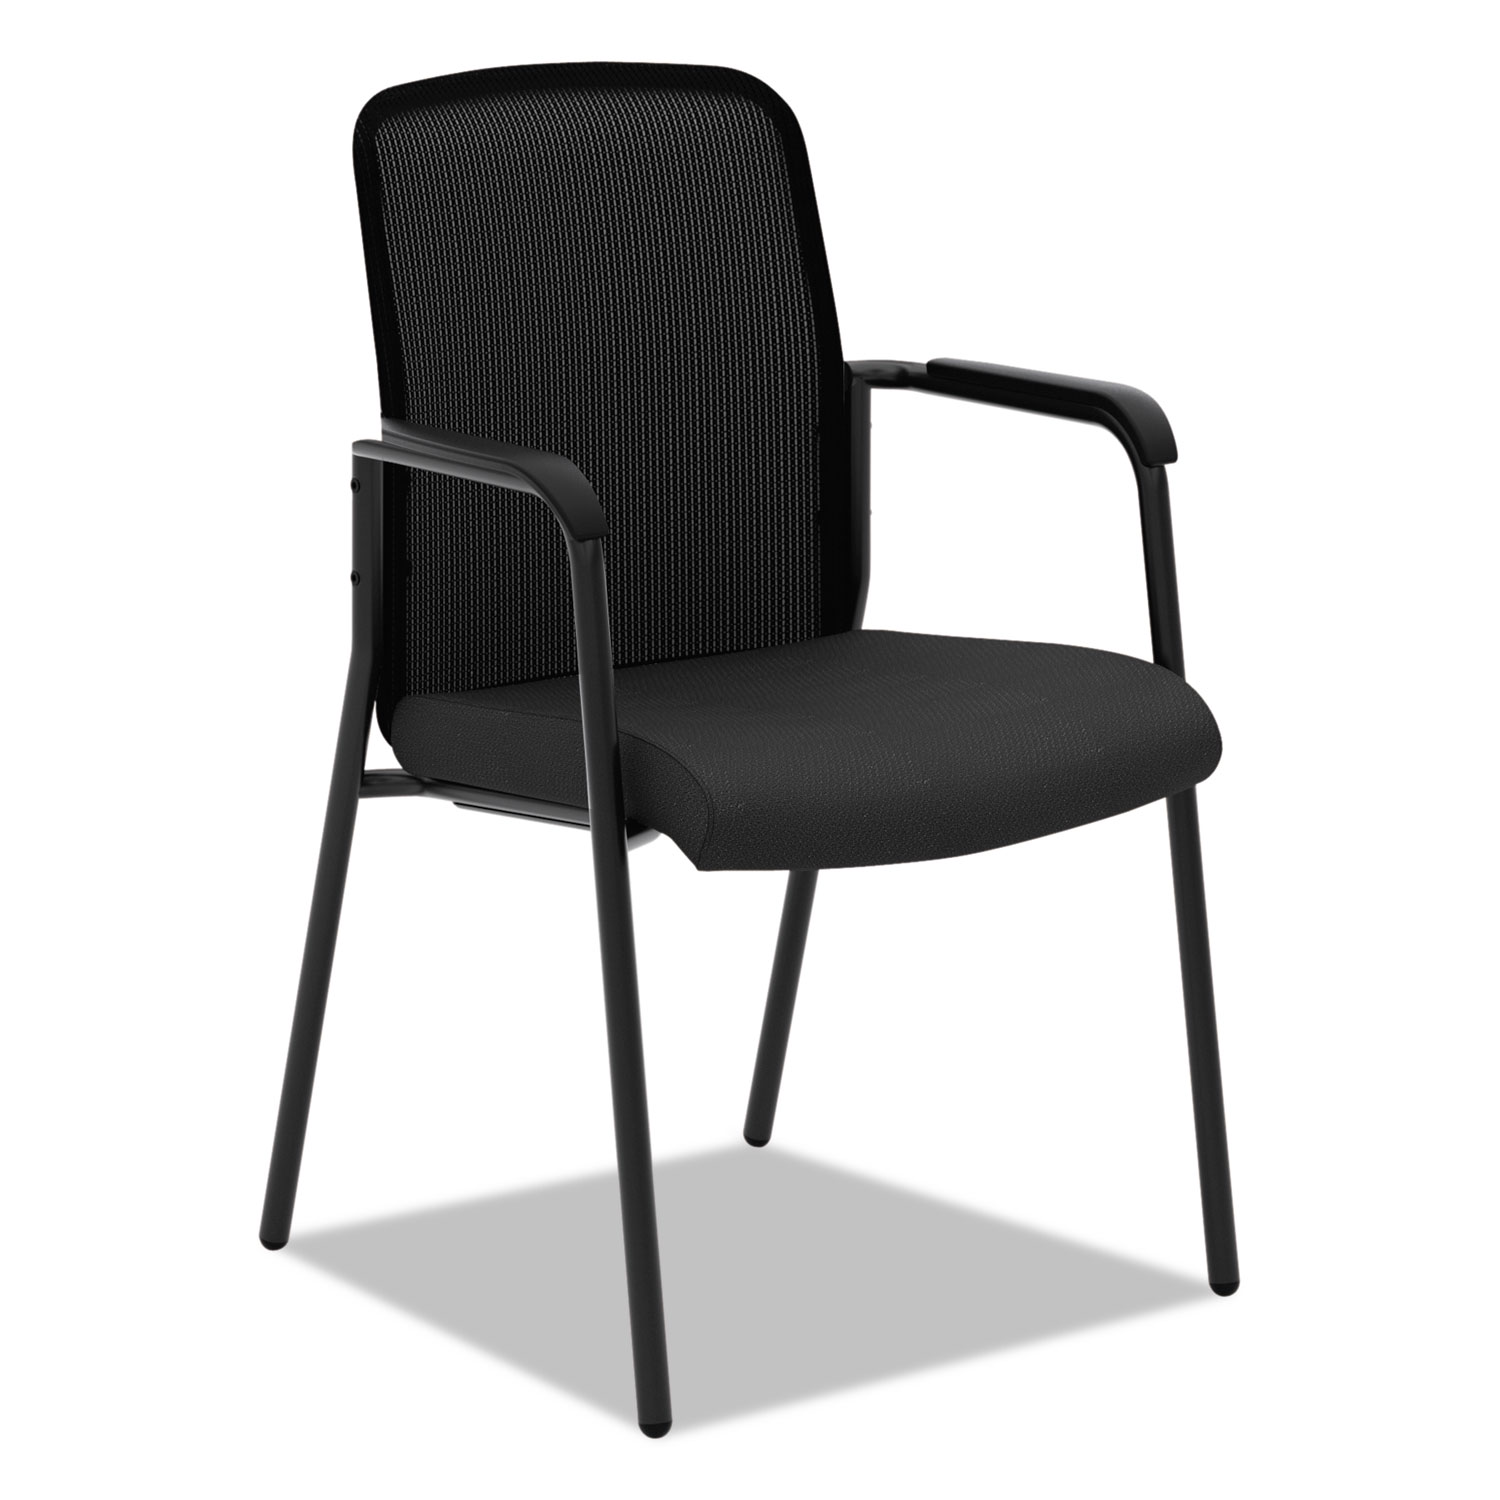  HON HVL518.ES10 VL518 Mesh Back Multi-Purpose Chair with Arms, Black Seat/Black Back, Black Base (BSXVL518ES10) 